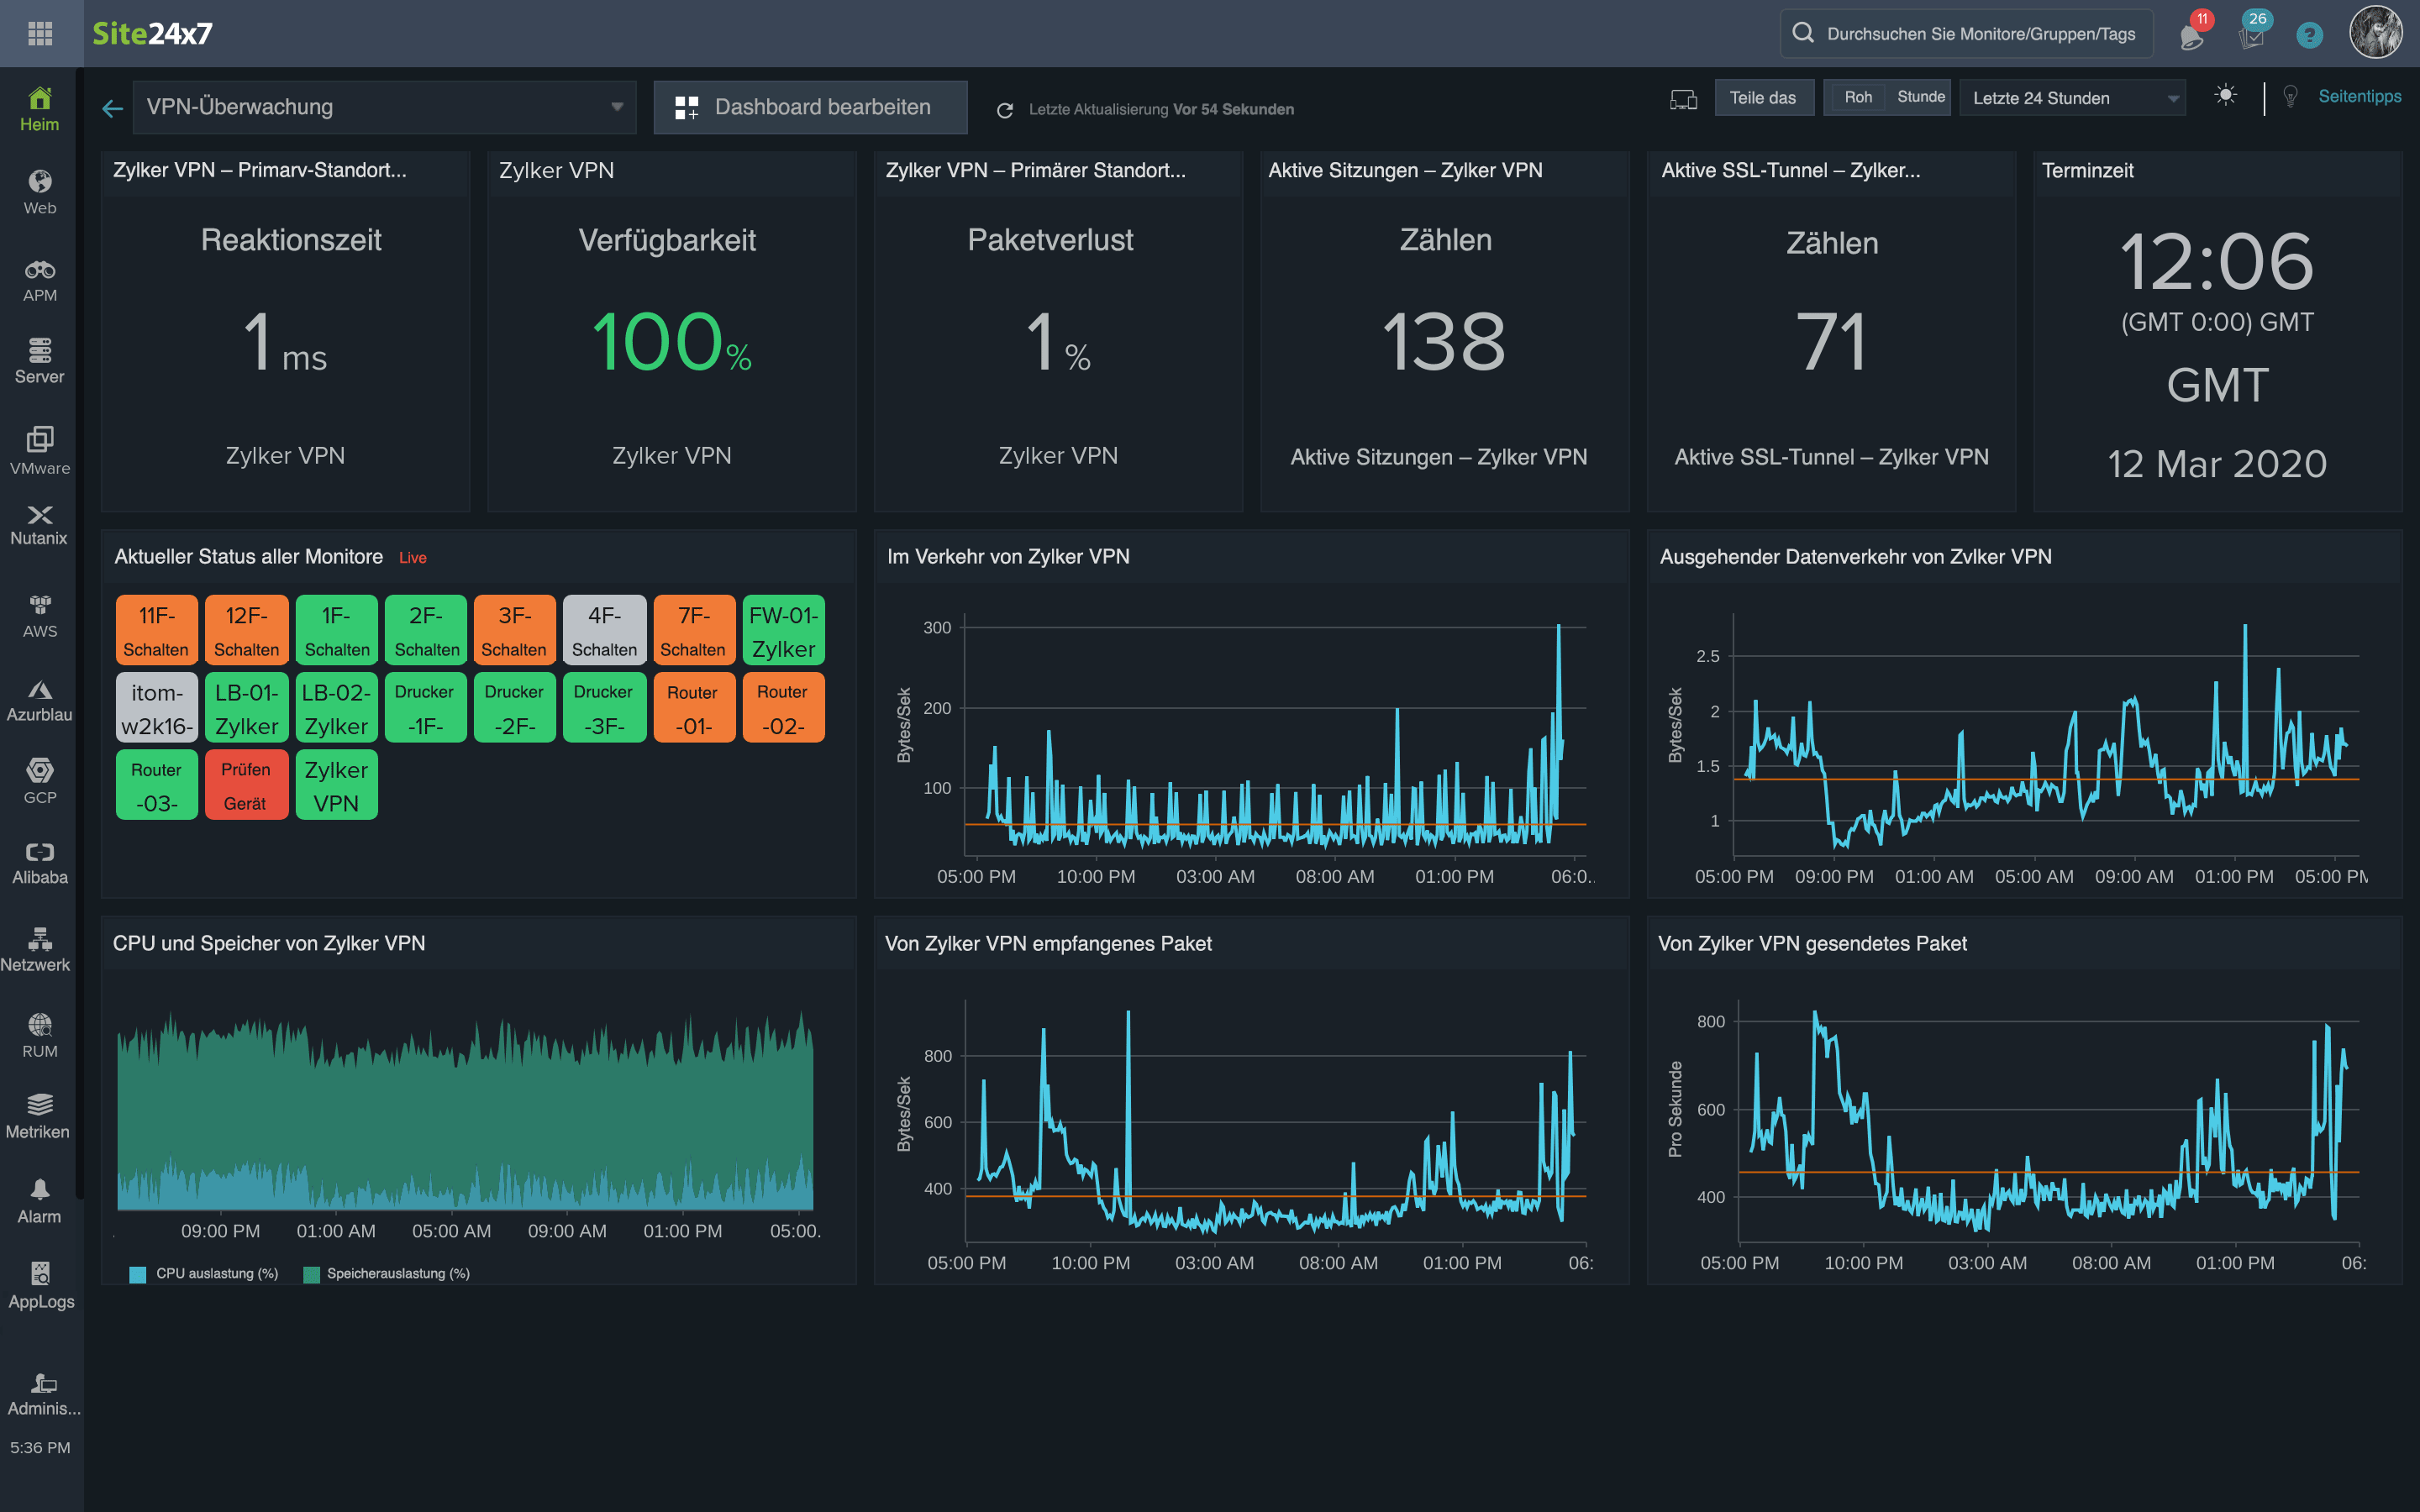 VPN monitoring tool dashboard